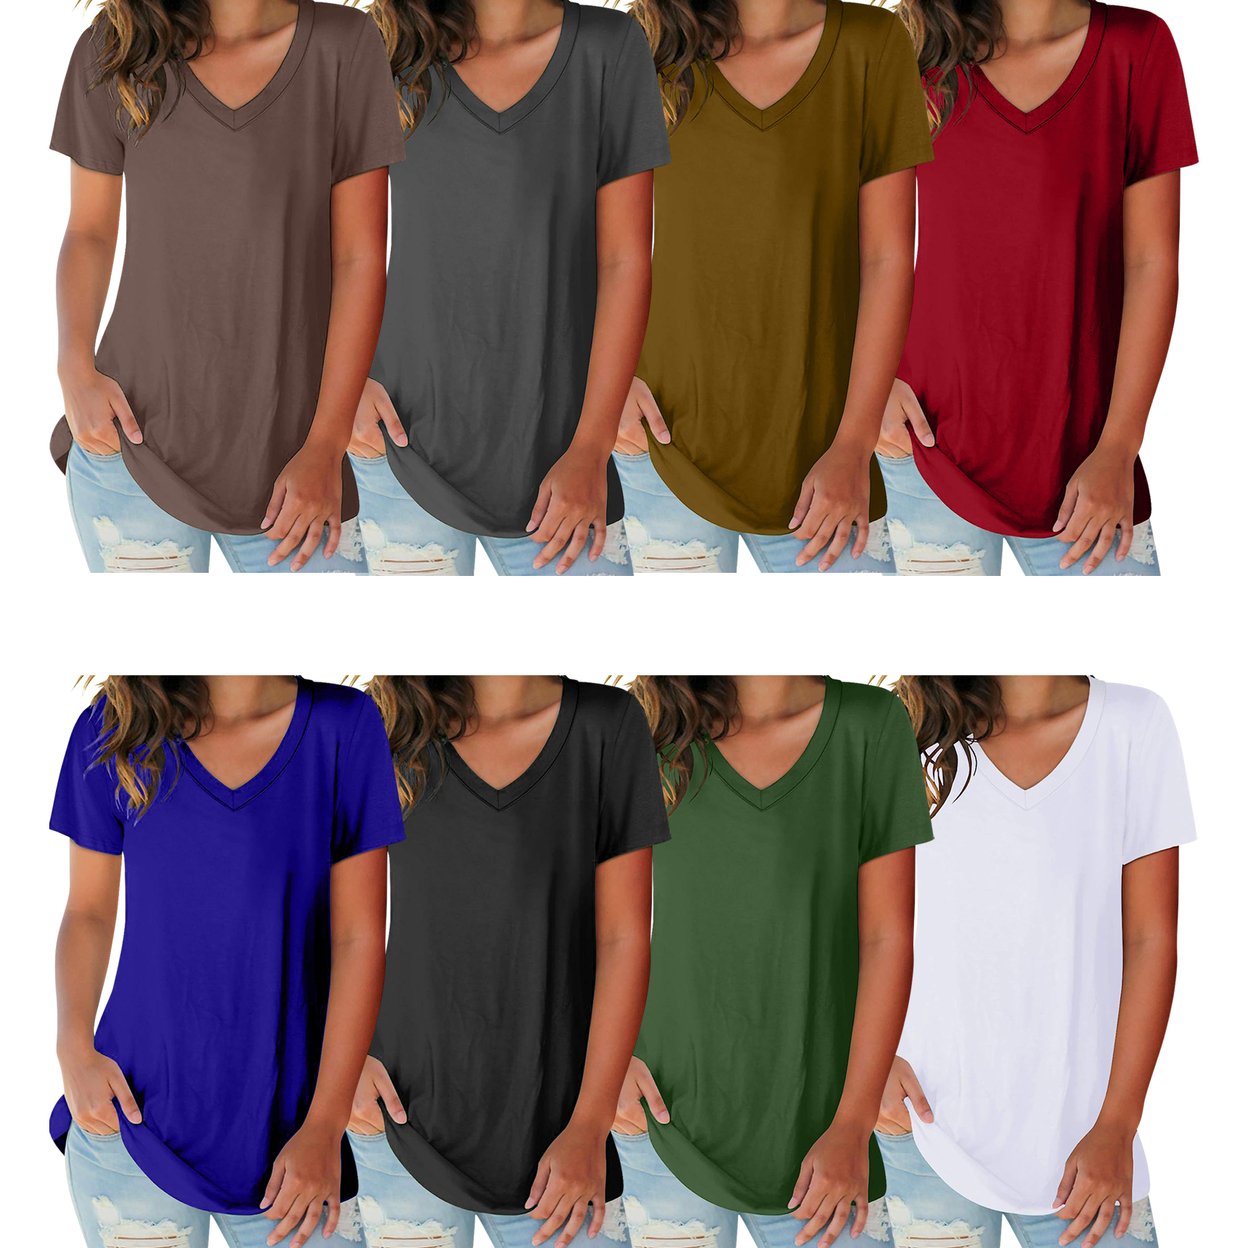 Women's Ultra-Soft Smooth Cotton Blend Basic V-Neck Short Sleeve Shirts - Green, X-large